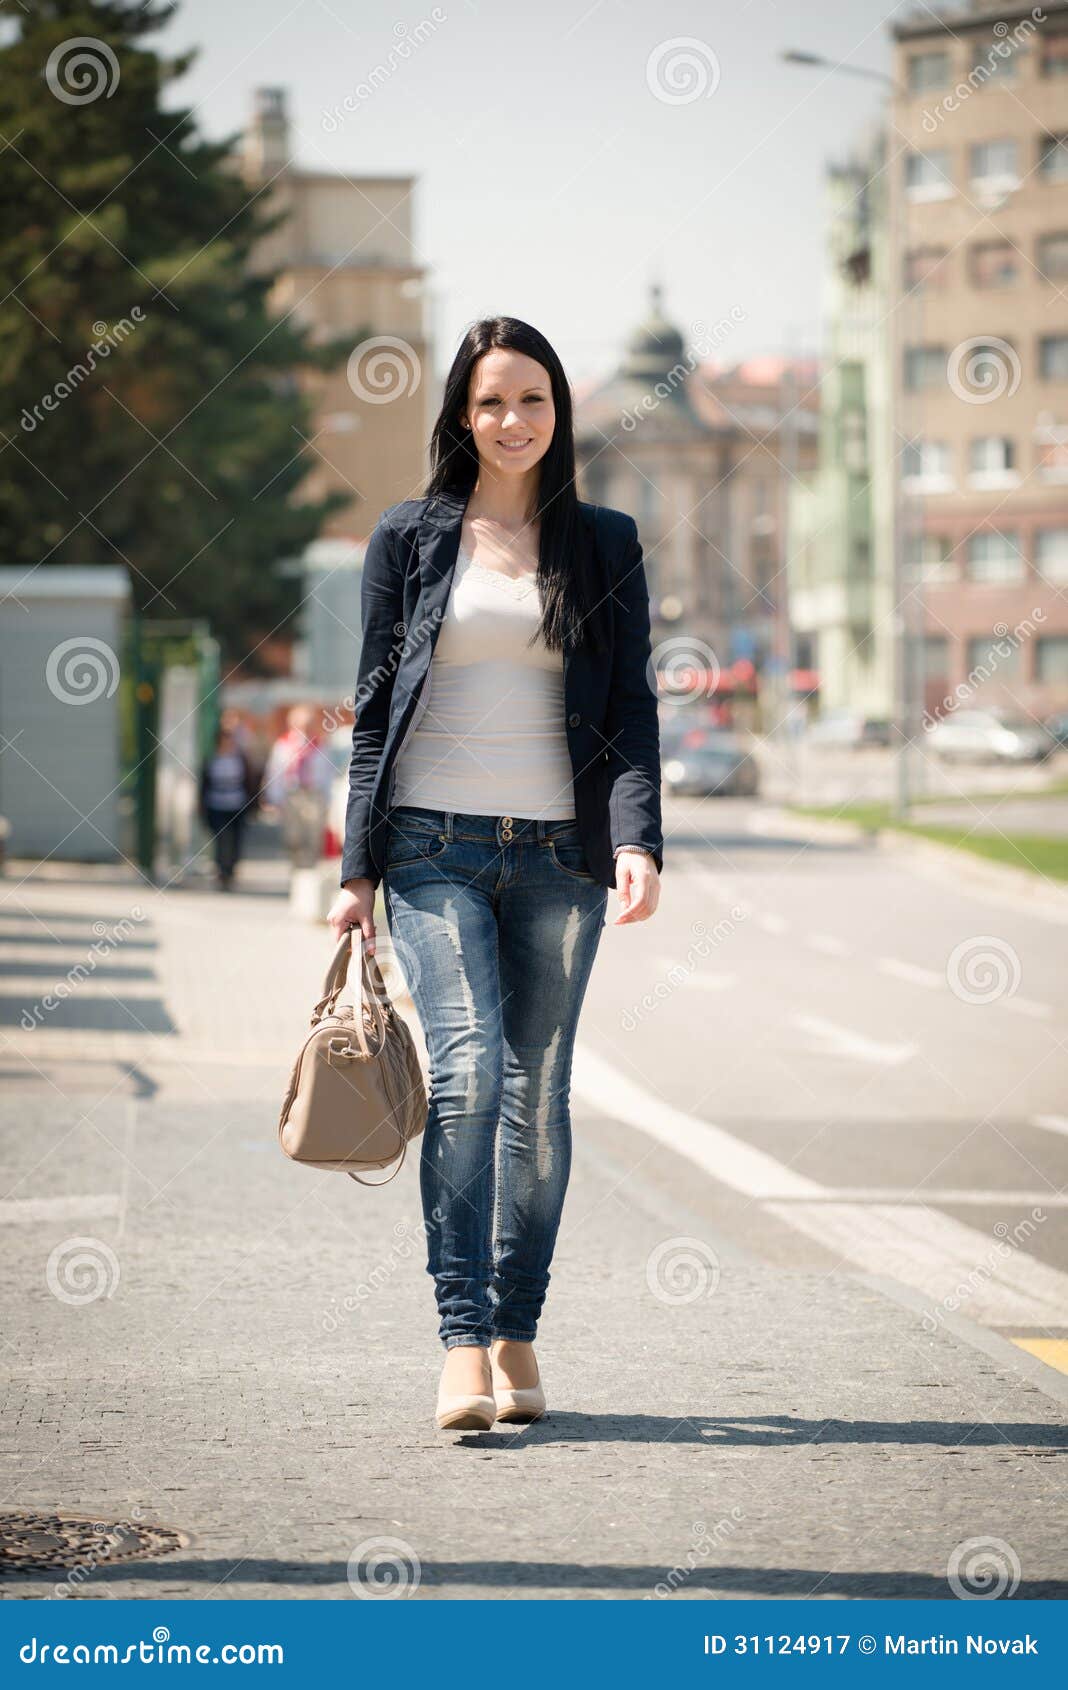 Walking street stock image. Image of handbag, copy, female - 31124917